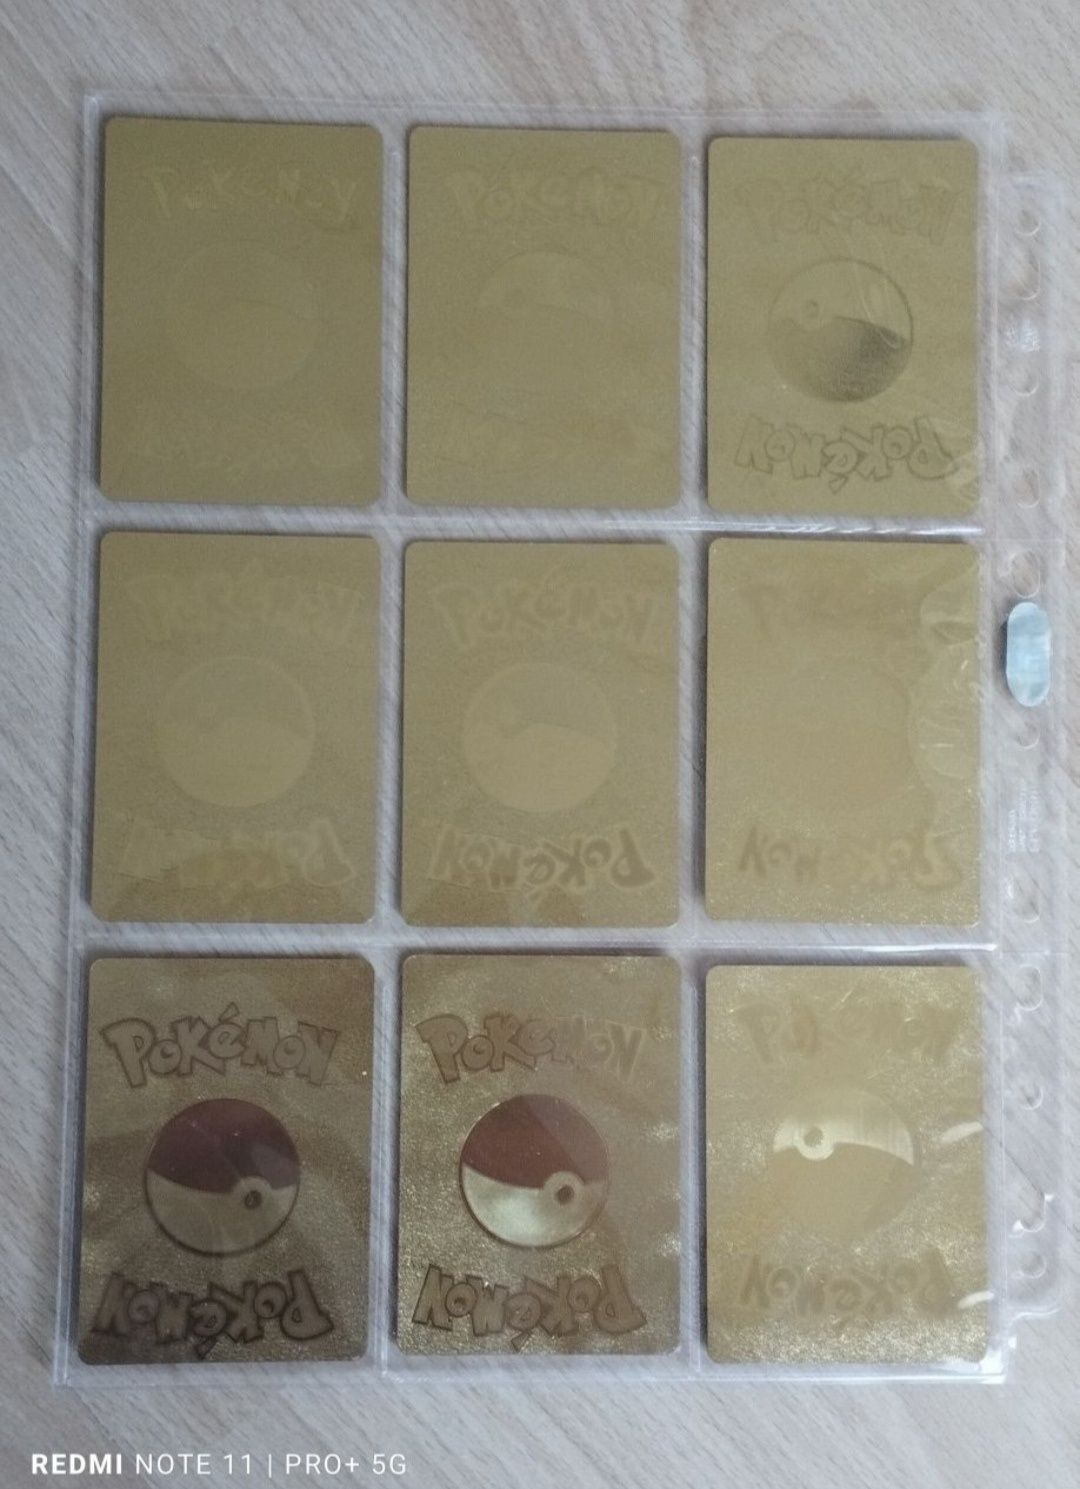 Pokémon TCG Golden Cards